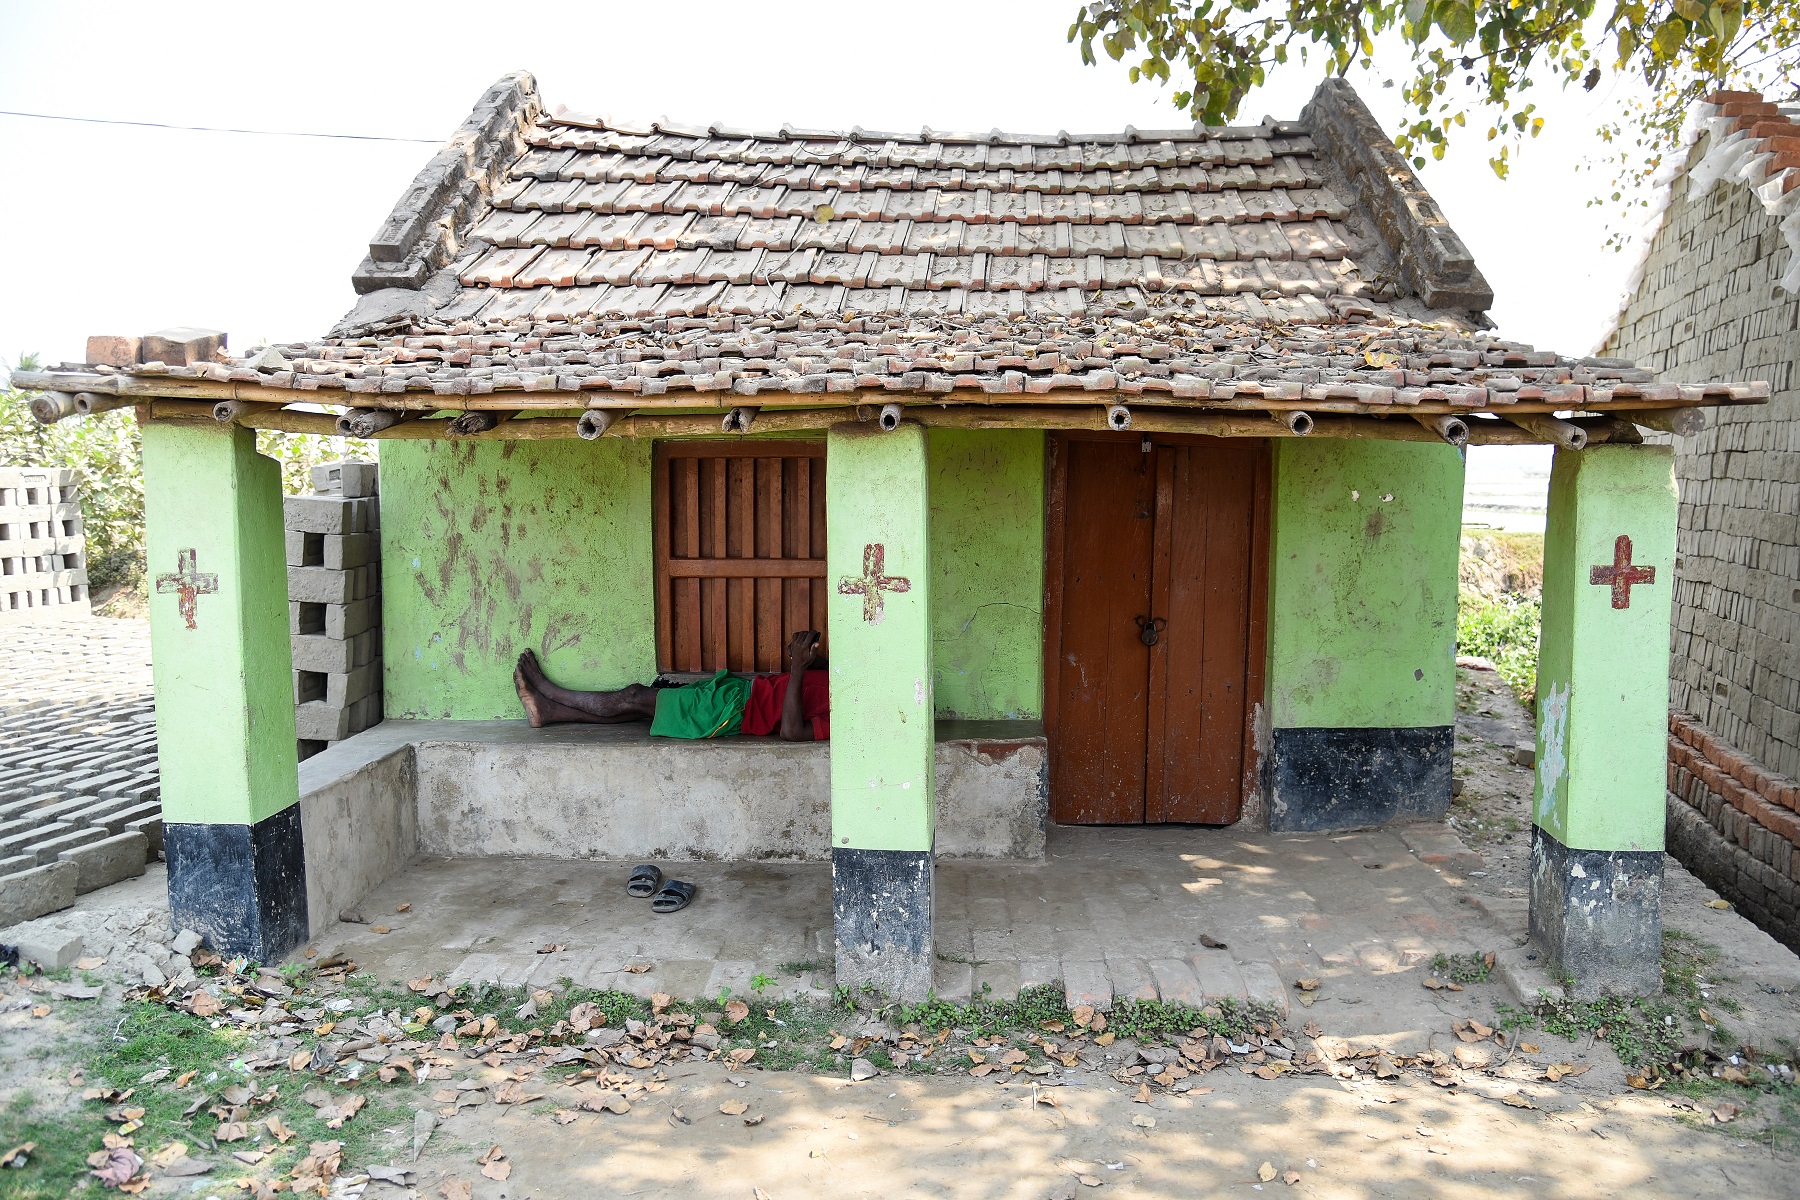 A closed health centre inside the brick kilns in North 24 Parganas distric